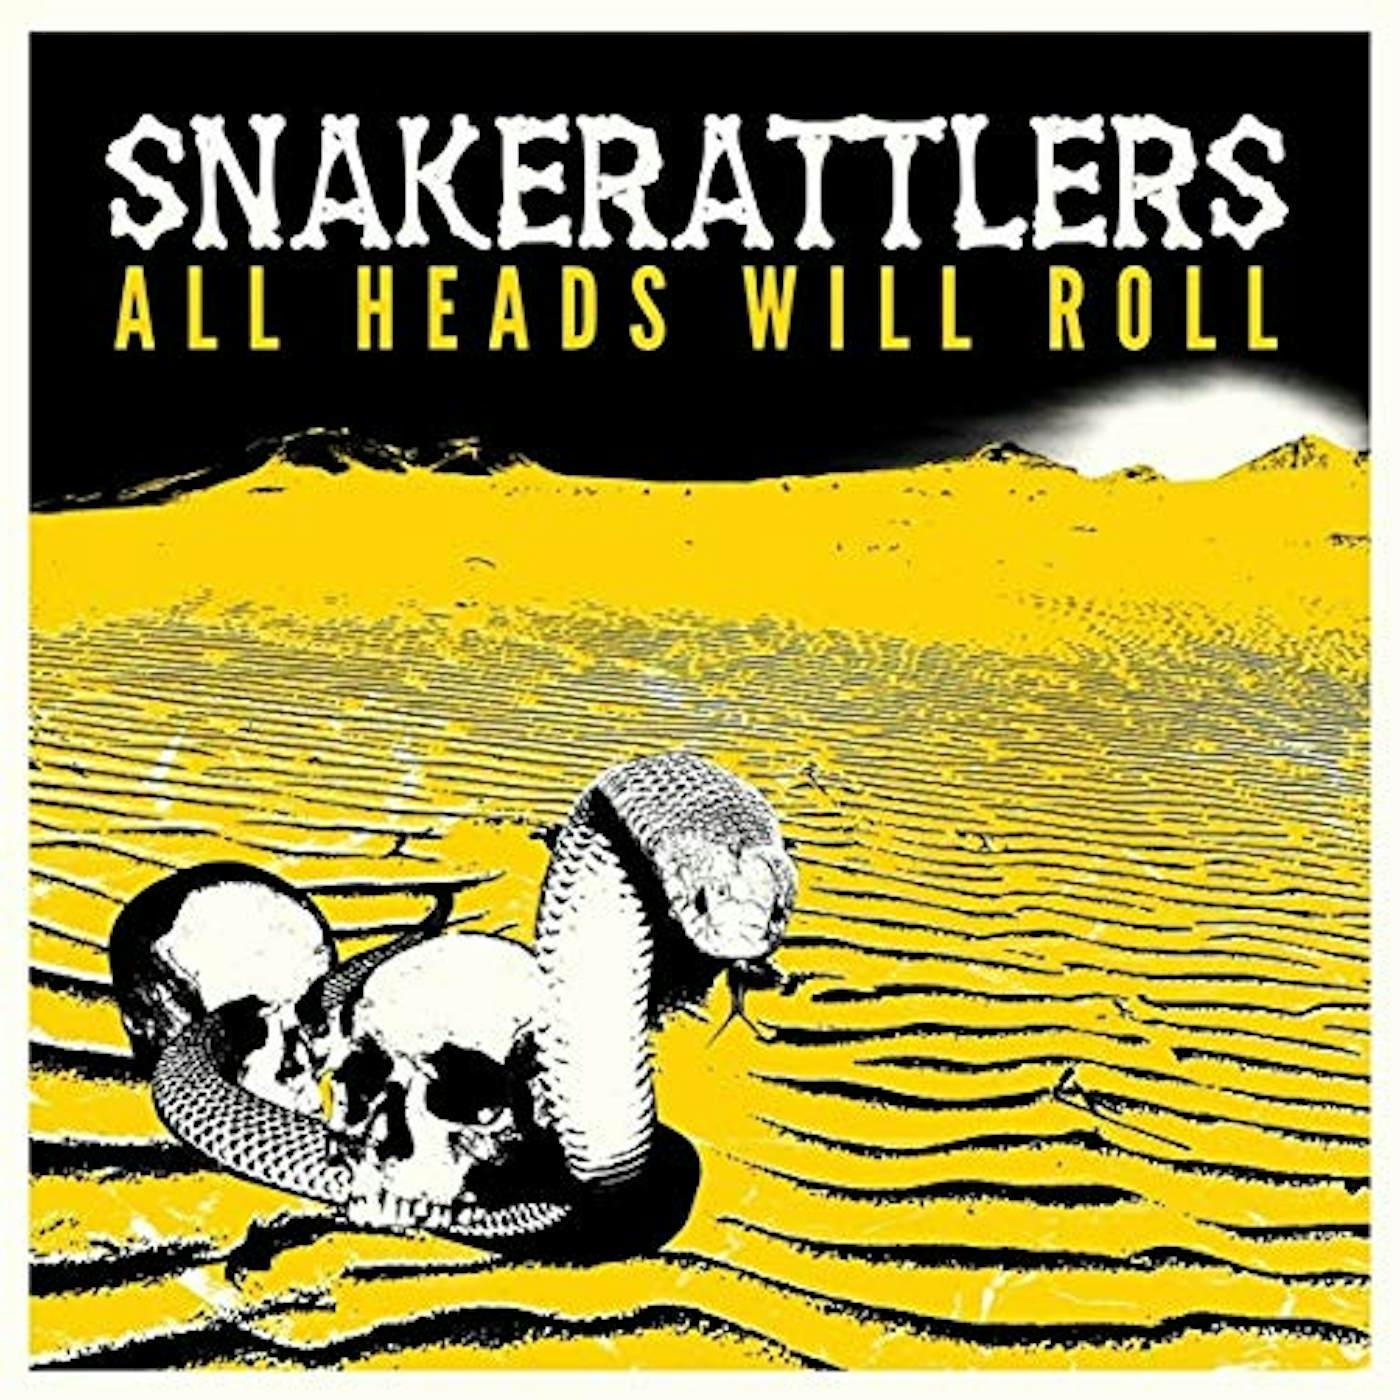 Snakerattlers All Heads Will Roll Vinyl Record